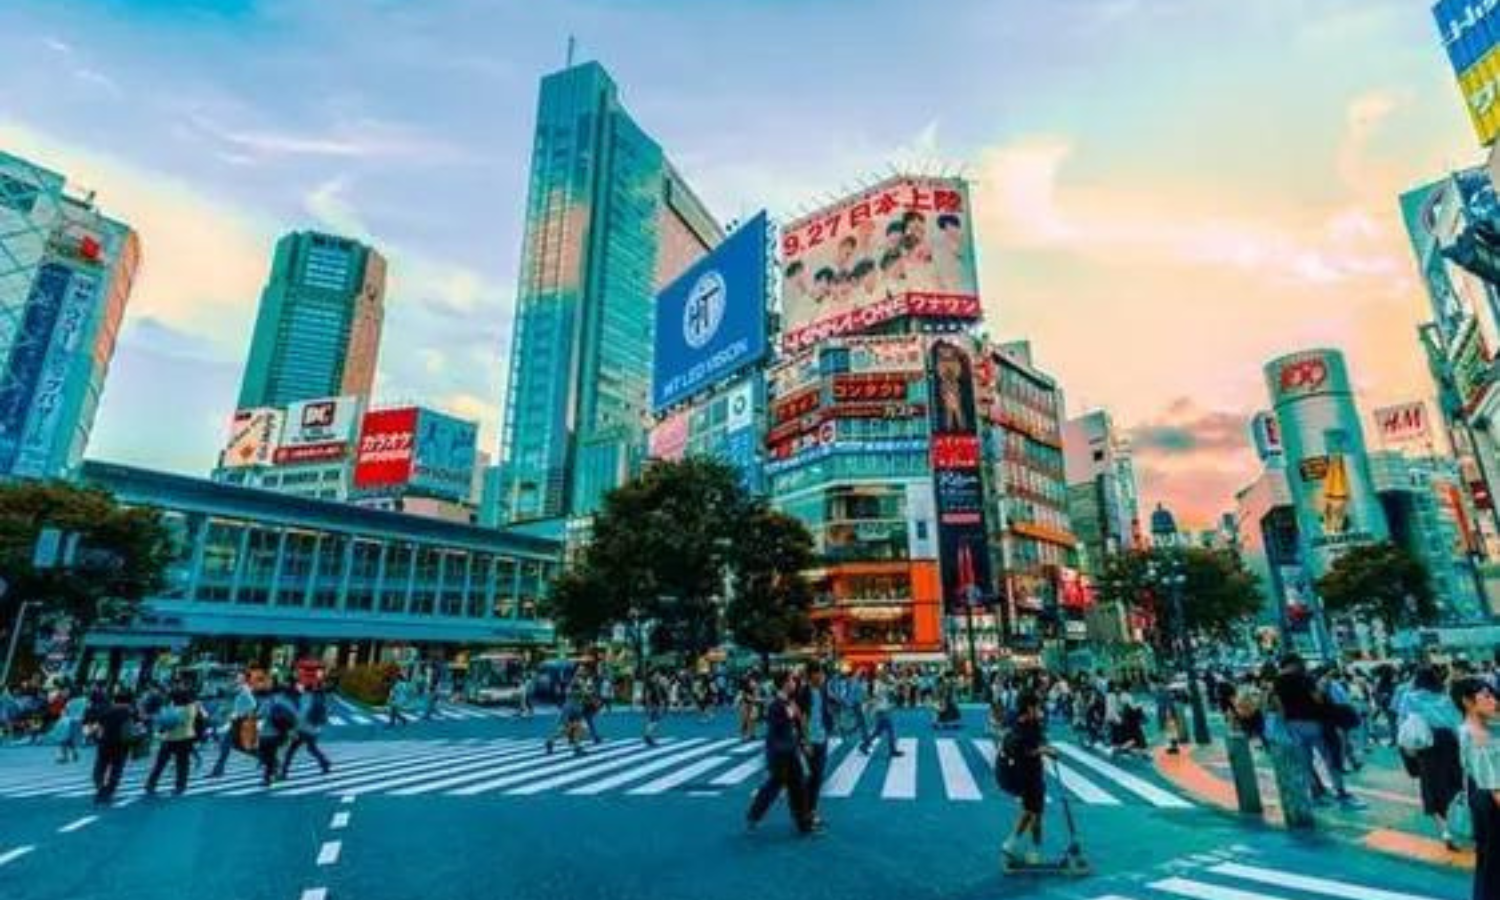 tourhub | Vio Travel | Japan's Big Four 11 Days 